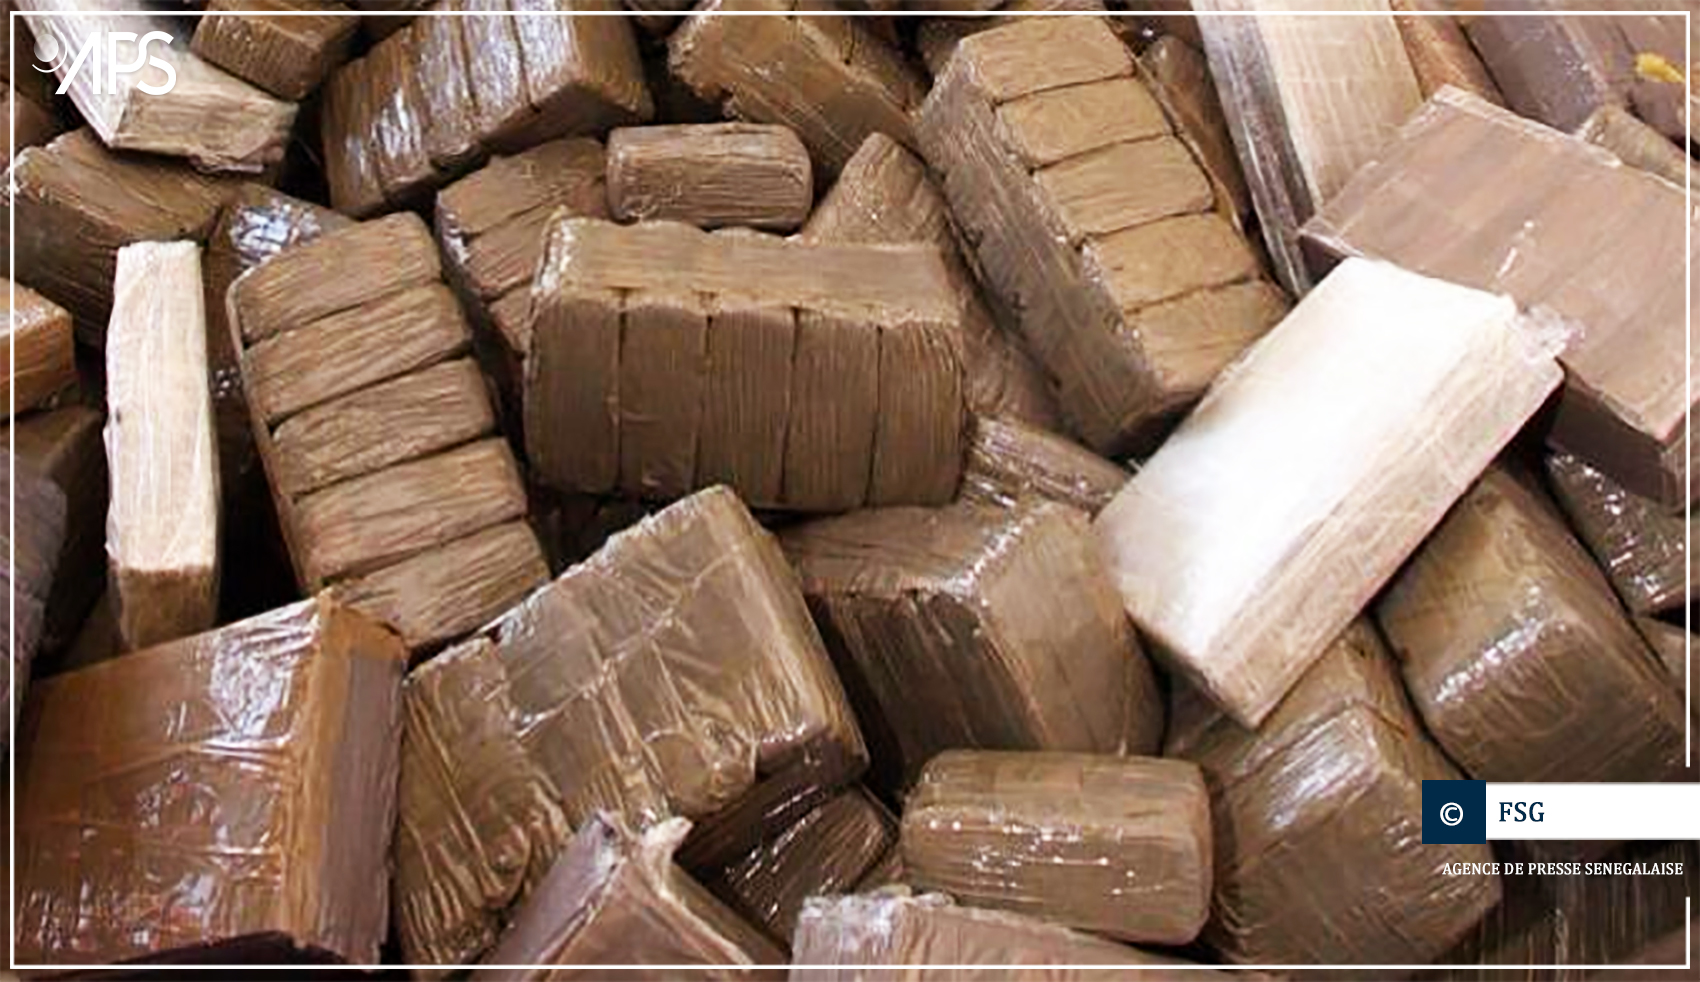  Trafic de drogue : 1 137,6 kg de cocaïne saisis à Kidira 